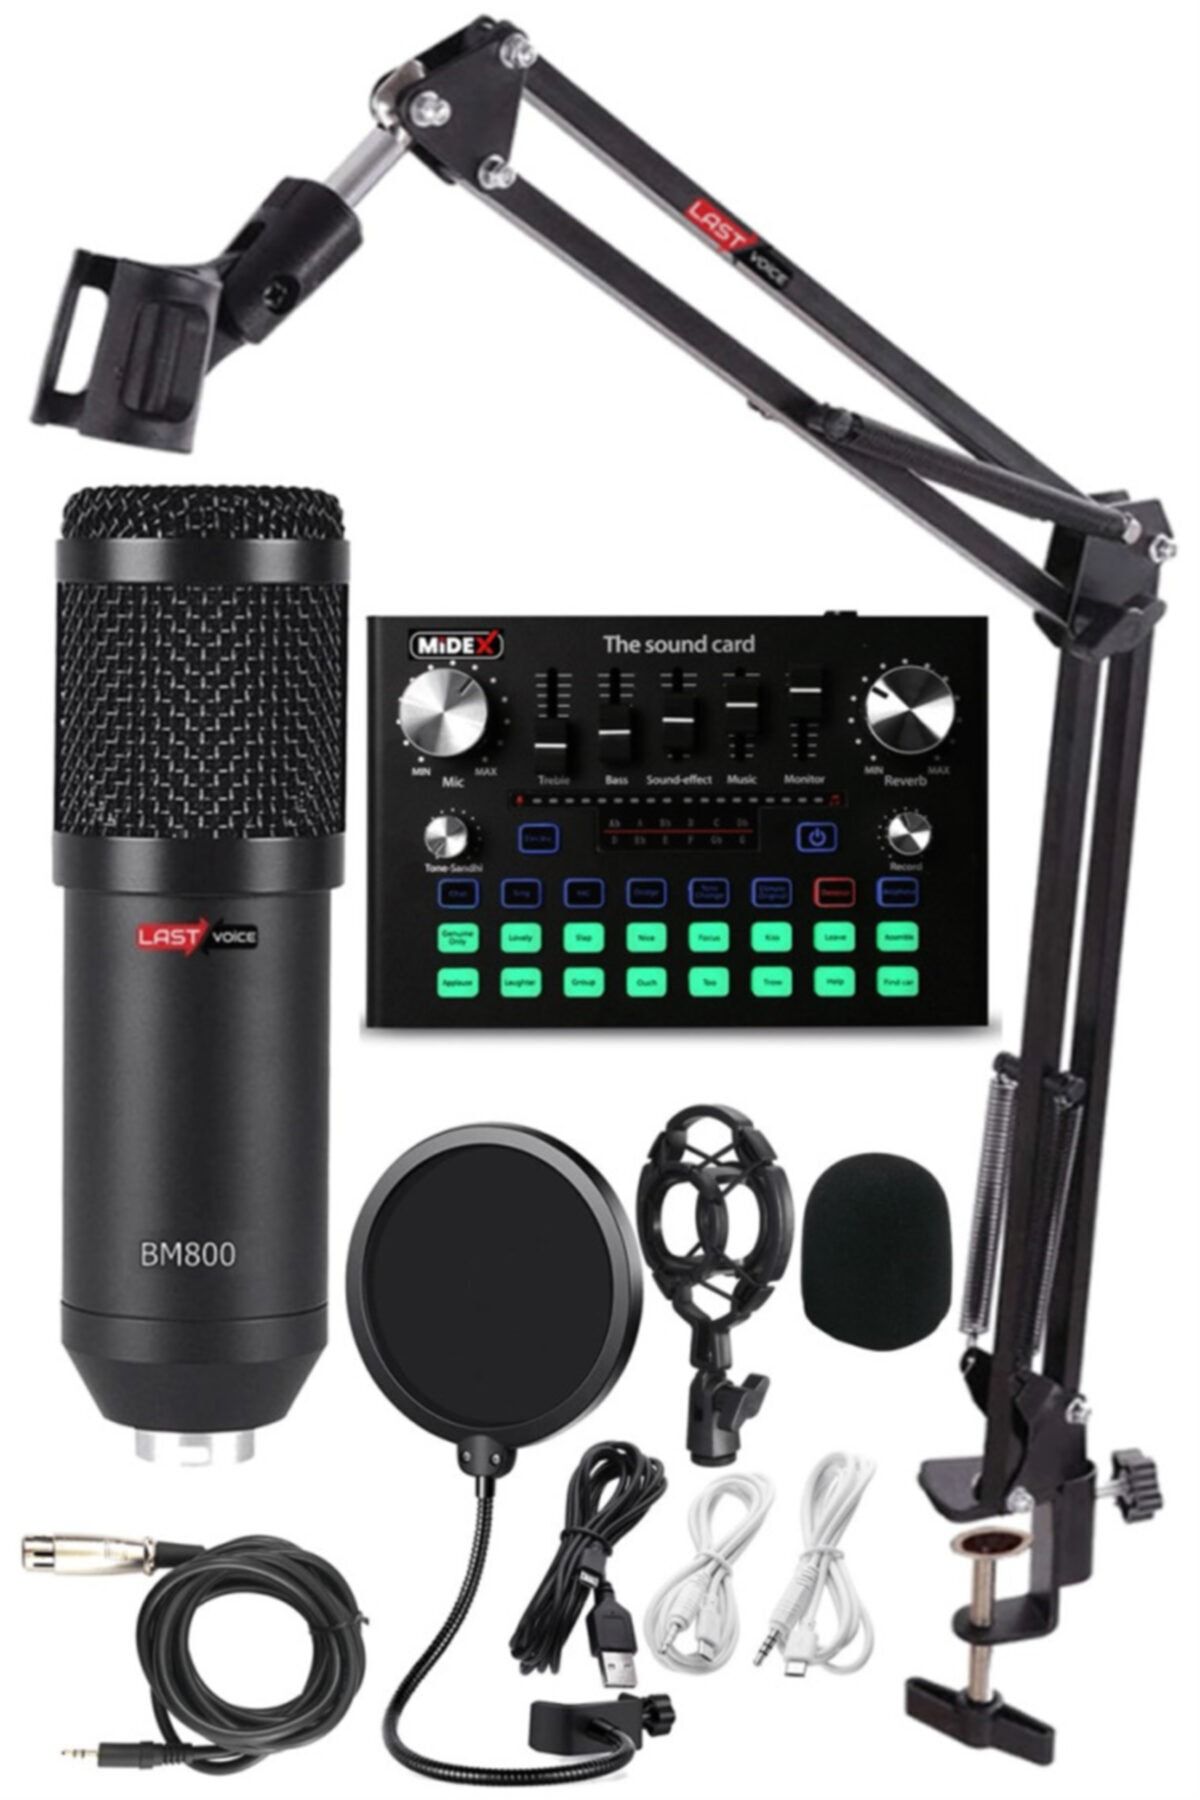 Lastvoice Bm800 Live Plus Set Efektli Ses Kartı Mikrofon Stand Kayıt Canlı Yayın Seti